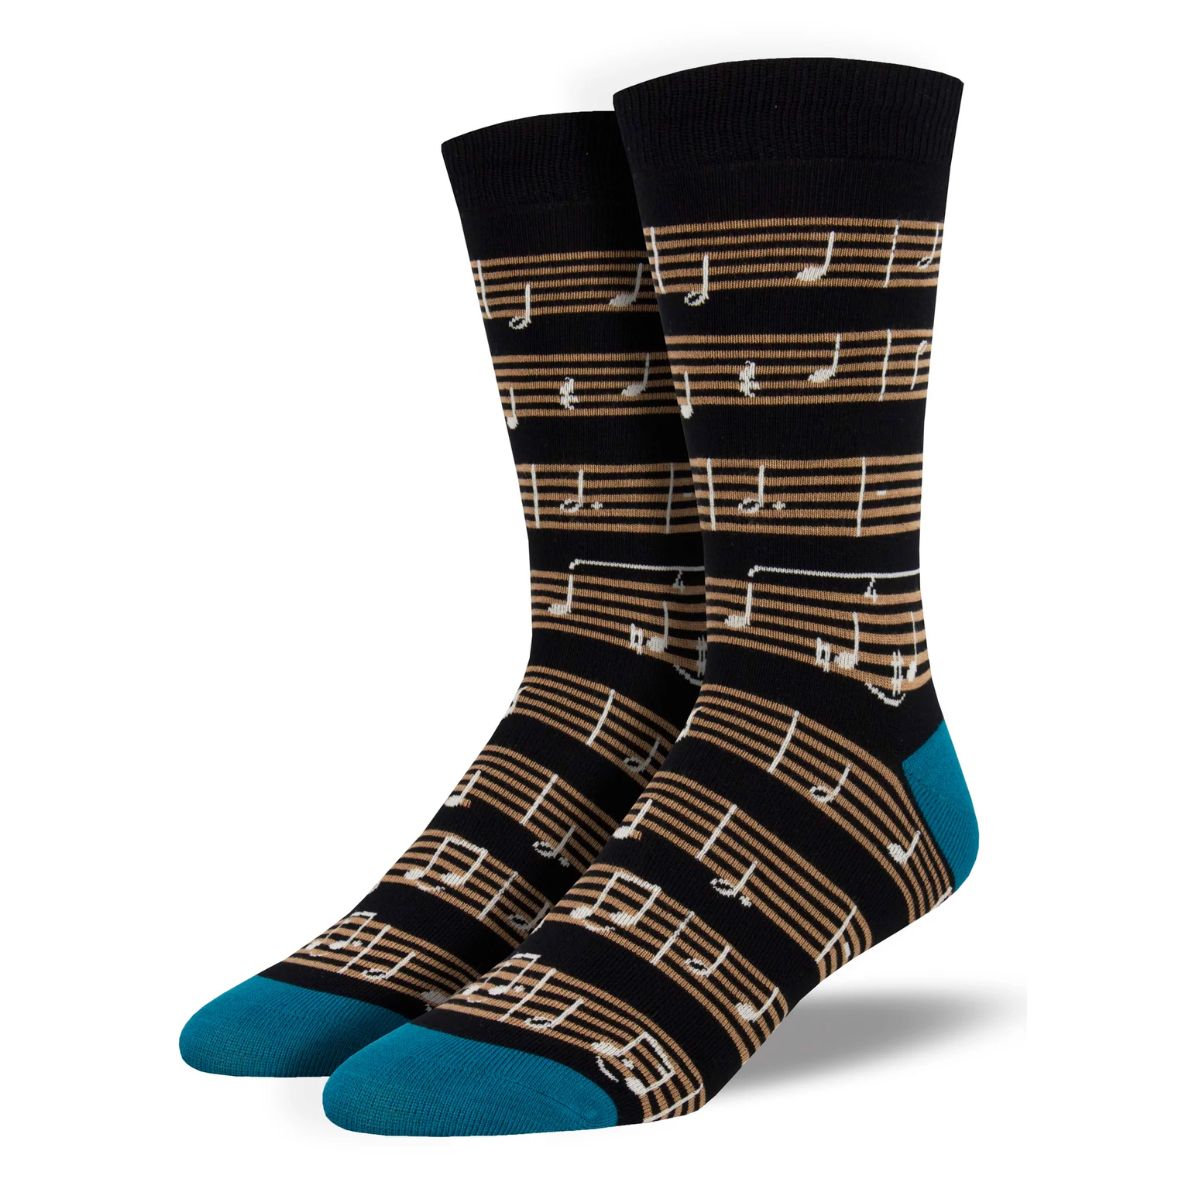 Sheet music socks a pair of black crew socks with sheet music print